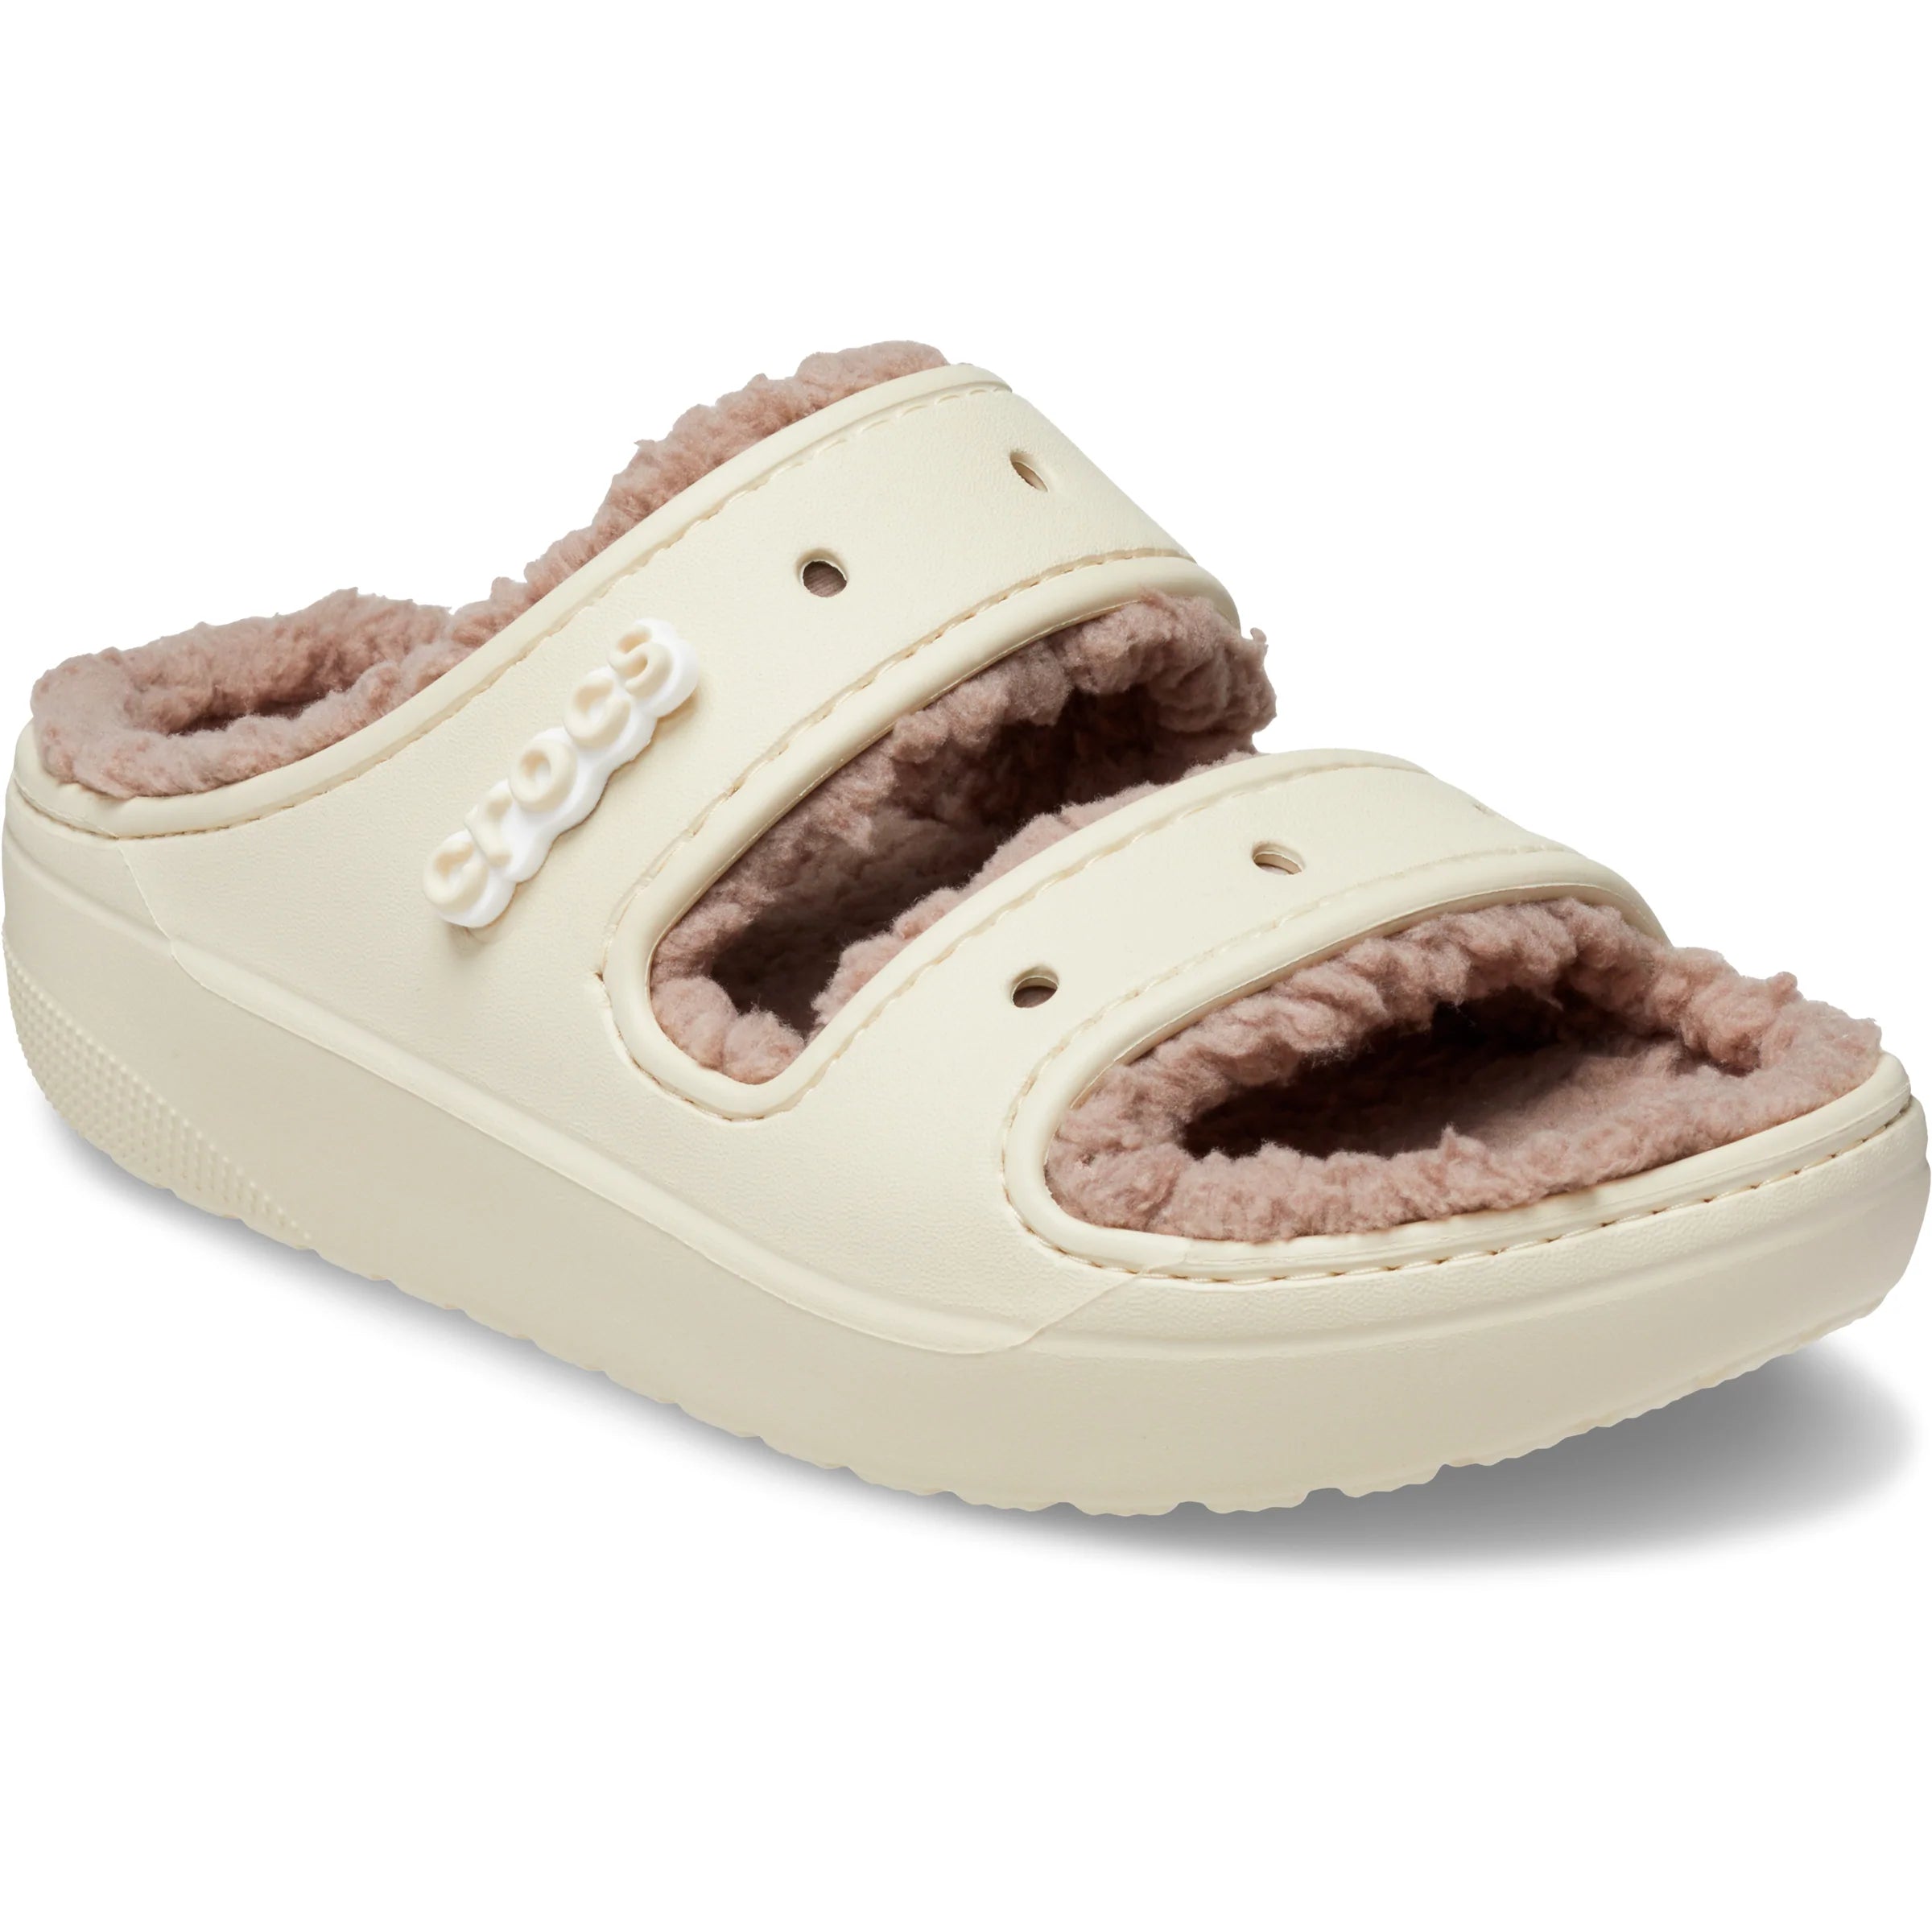 Classic Cozzzy Sandal - shoe&amp;me - Crocs - Crocs - Crocs, Sandal, Slide, Slipper